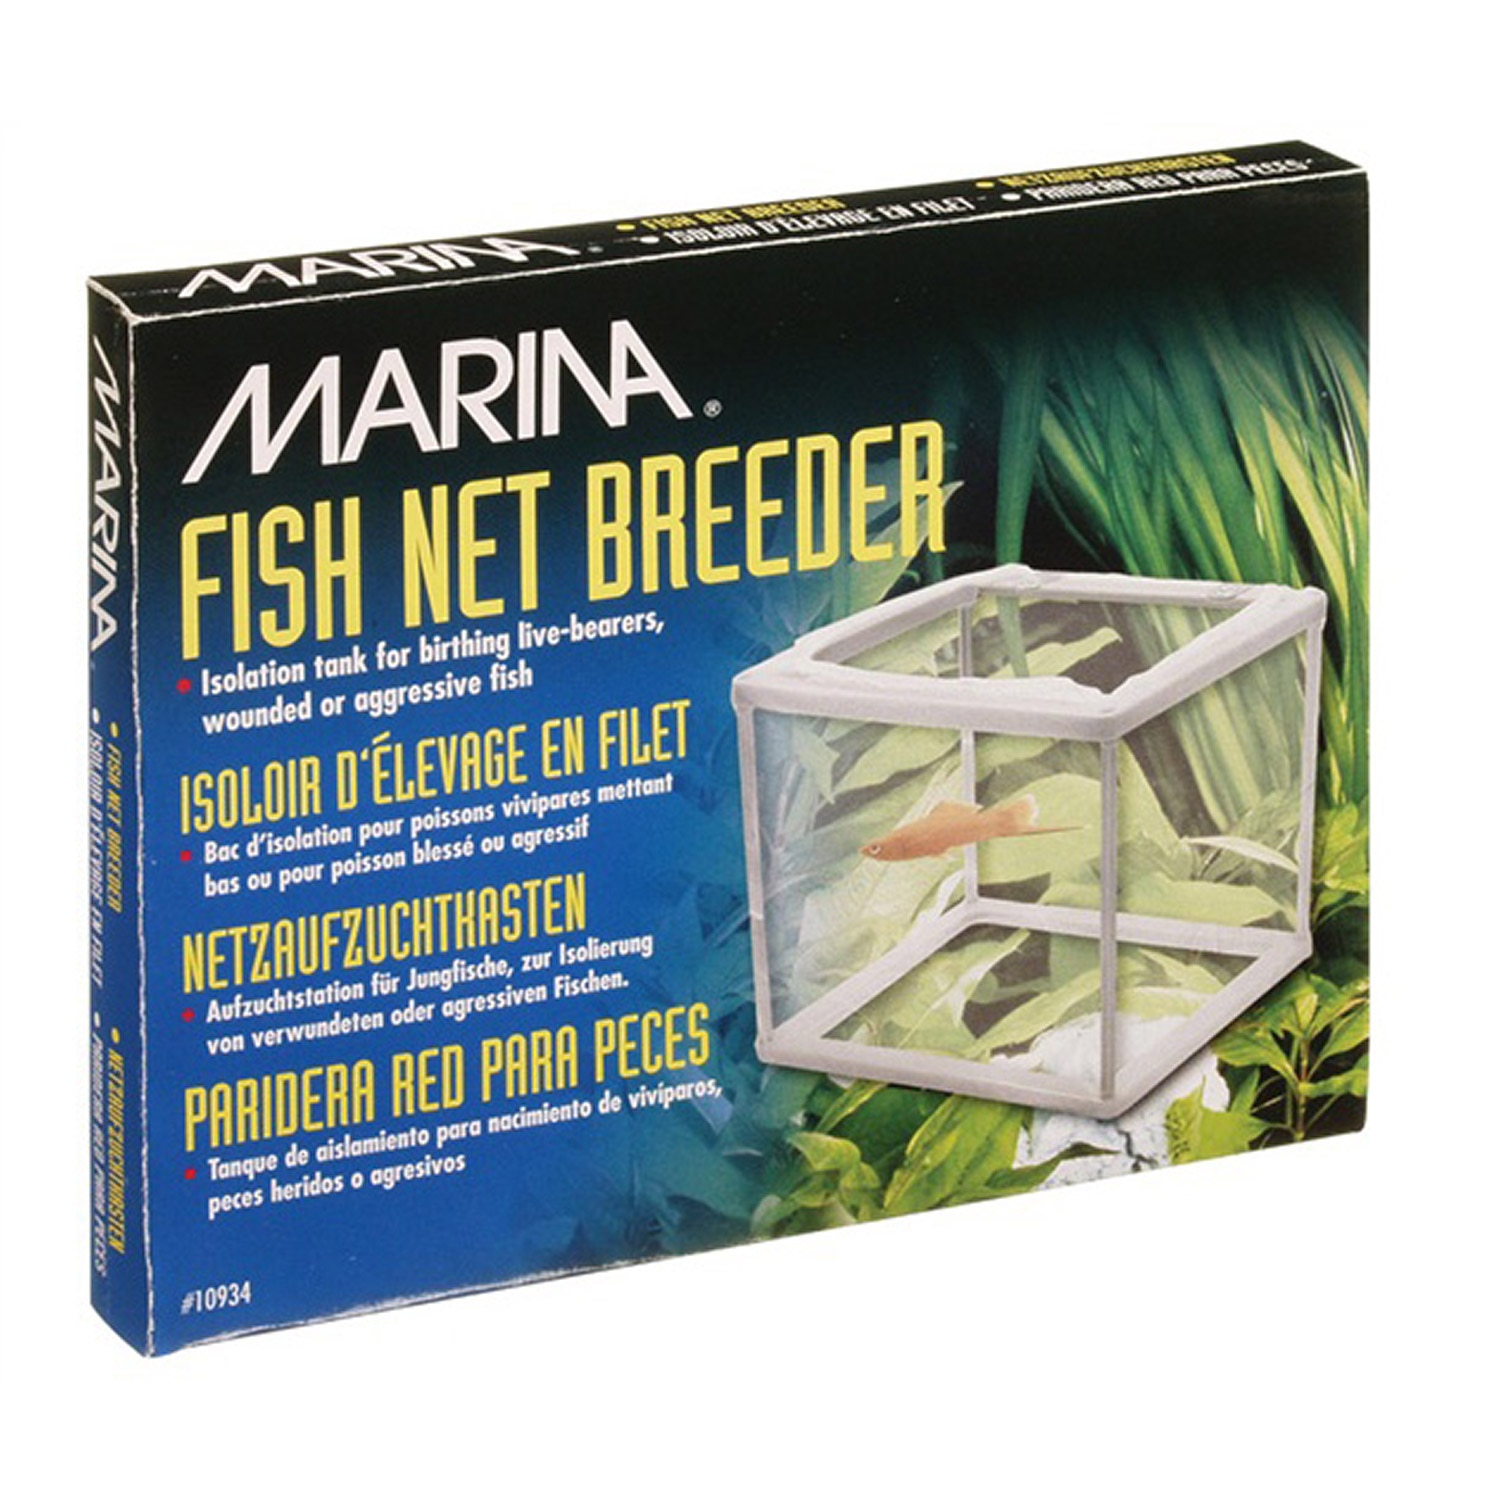 MARINA Fish Net Breeder